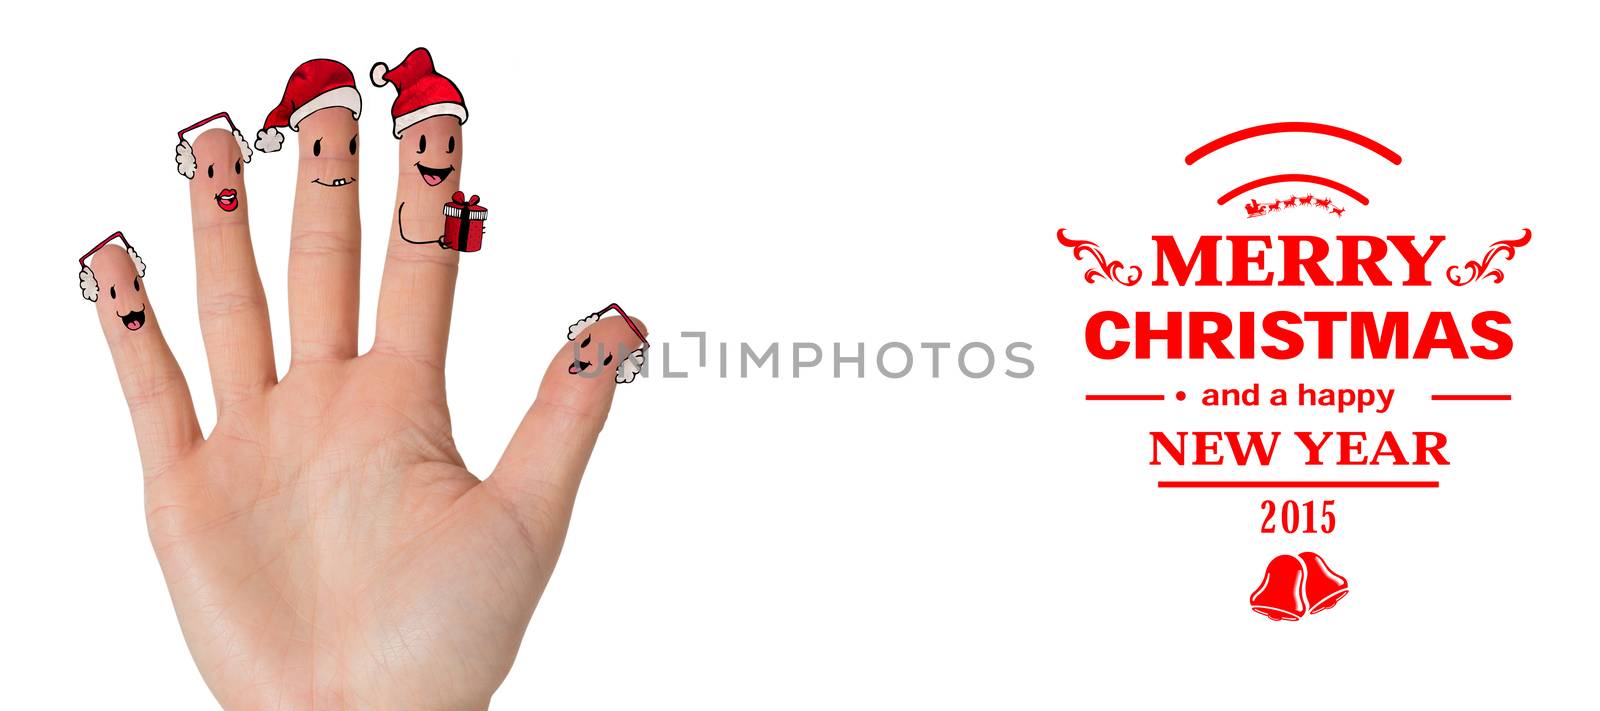 Composite image of christmas caroler fingers by Wavebreakmedia